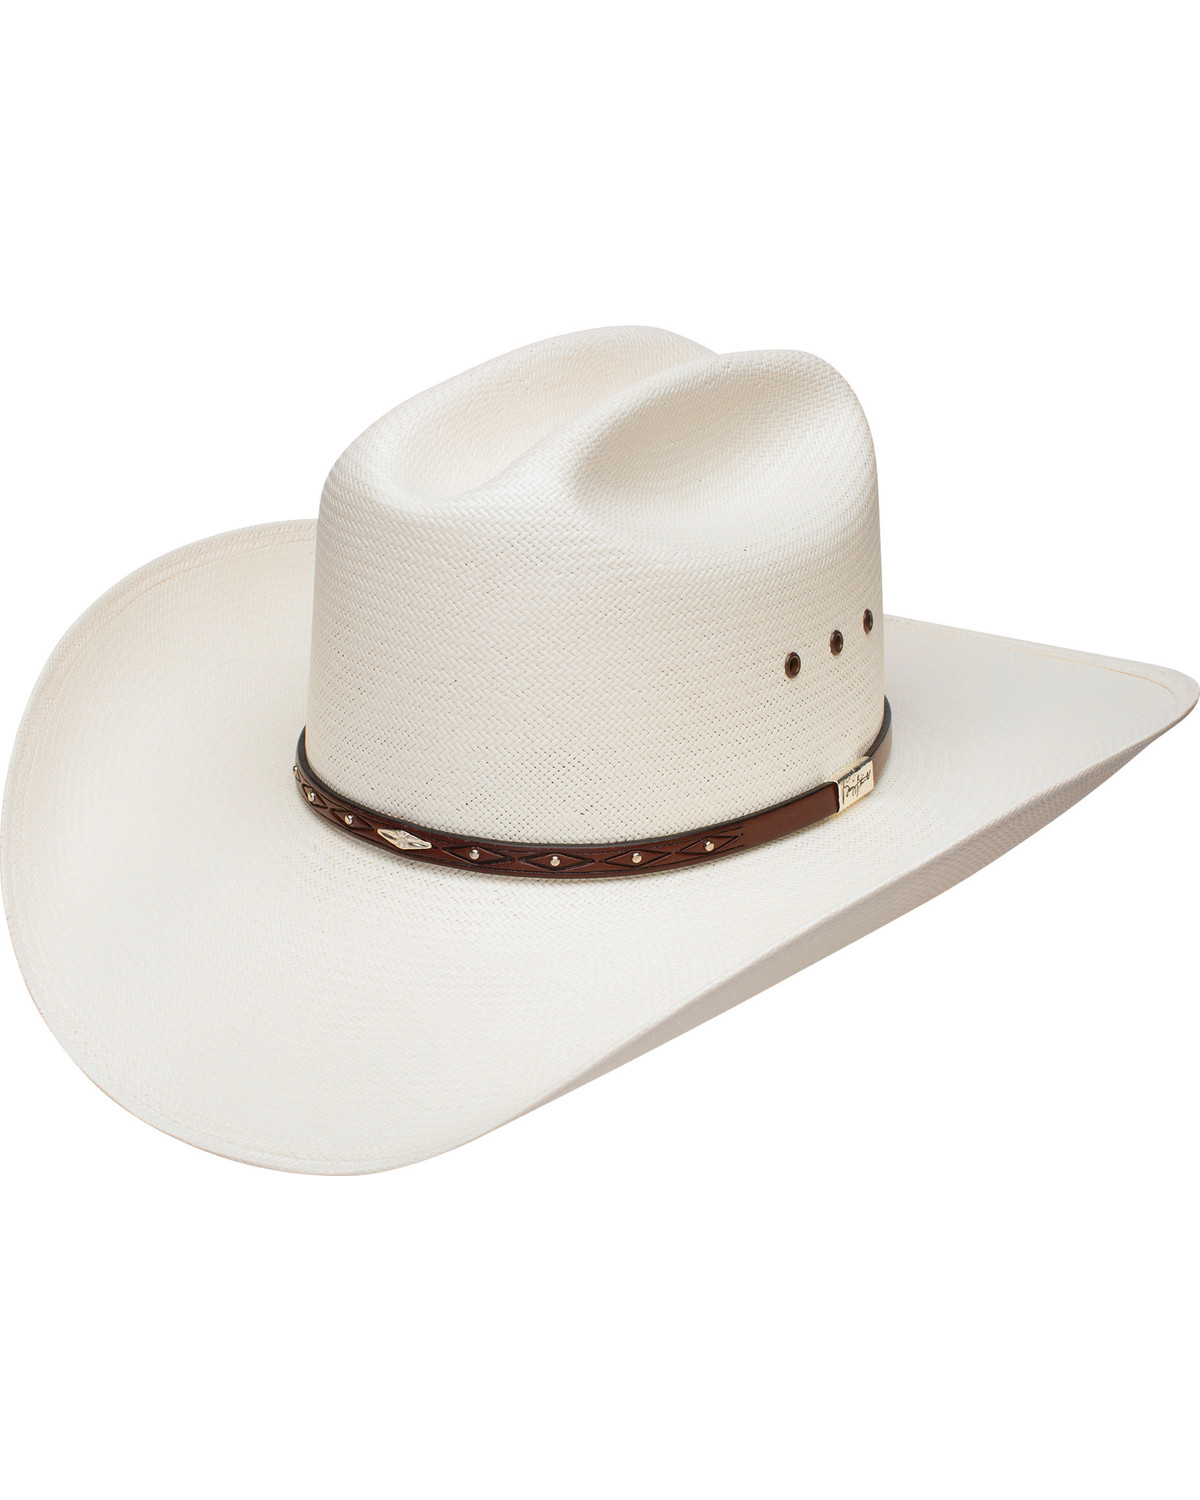 Resistol Santa Clara 10X Straw Cowboy Hat